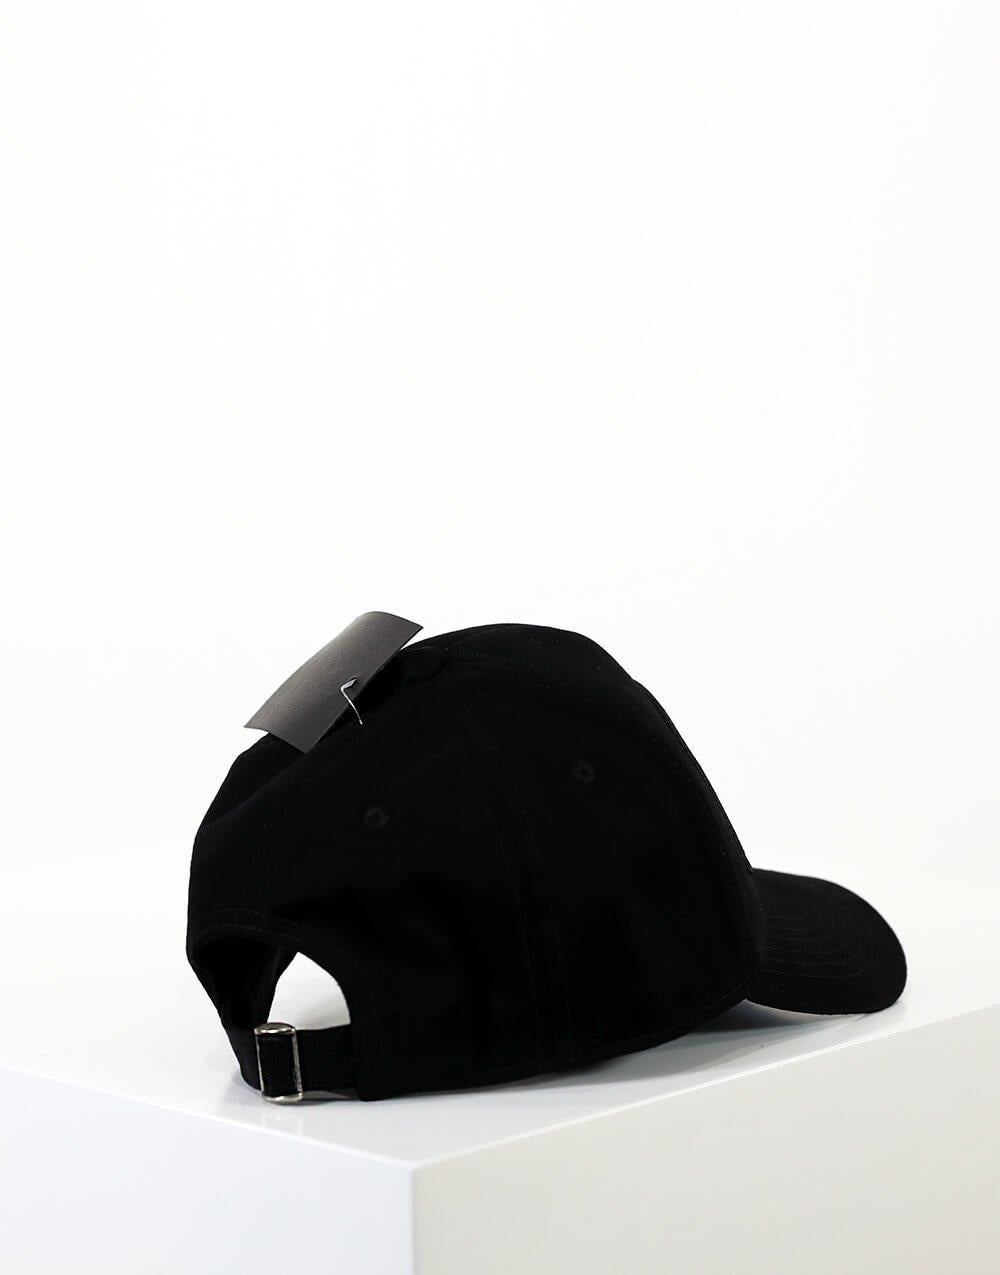 Black Boyfriend Adjustable Belt Hat - STREET MODE ™